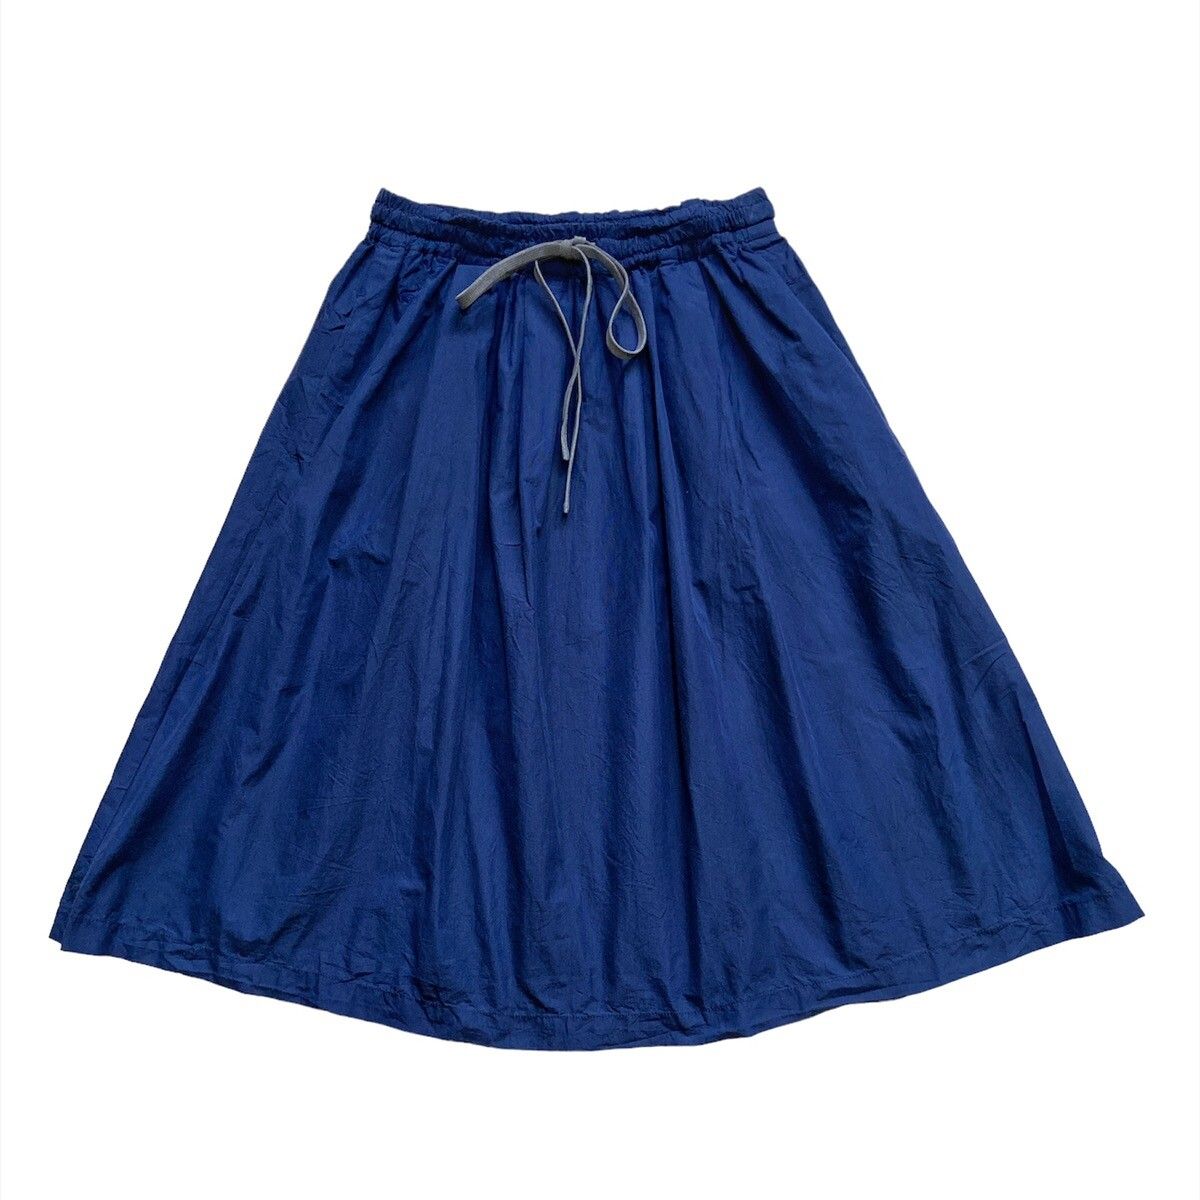 Lacoste Gypsy Mini Skirt - 1